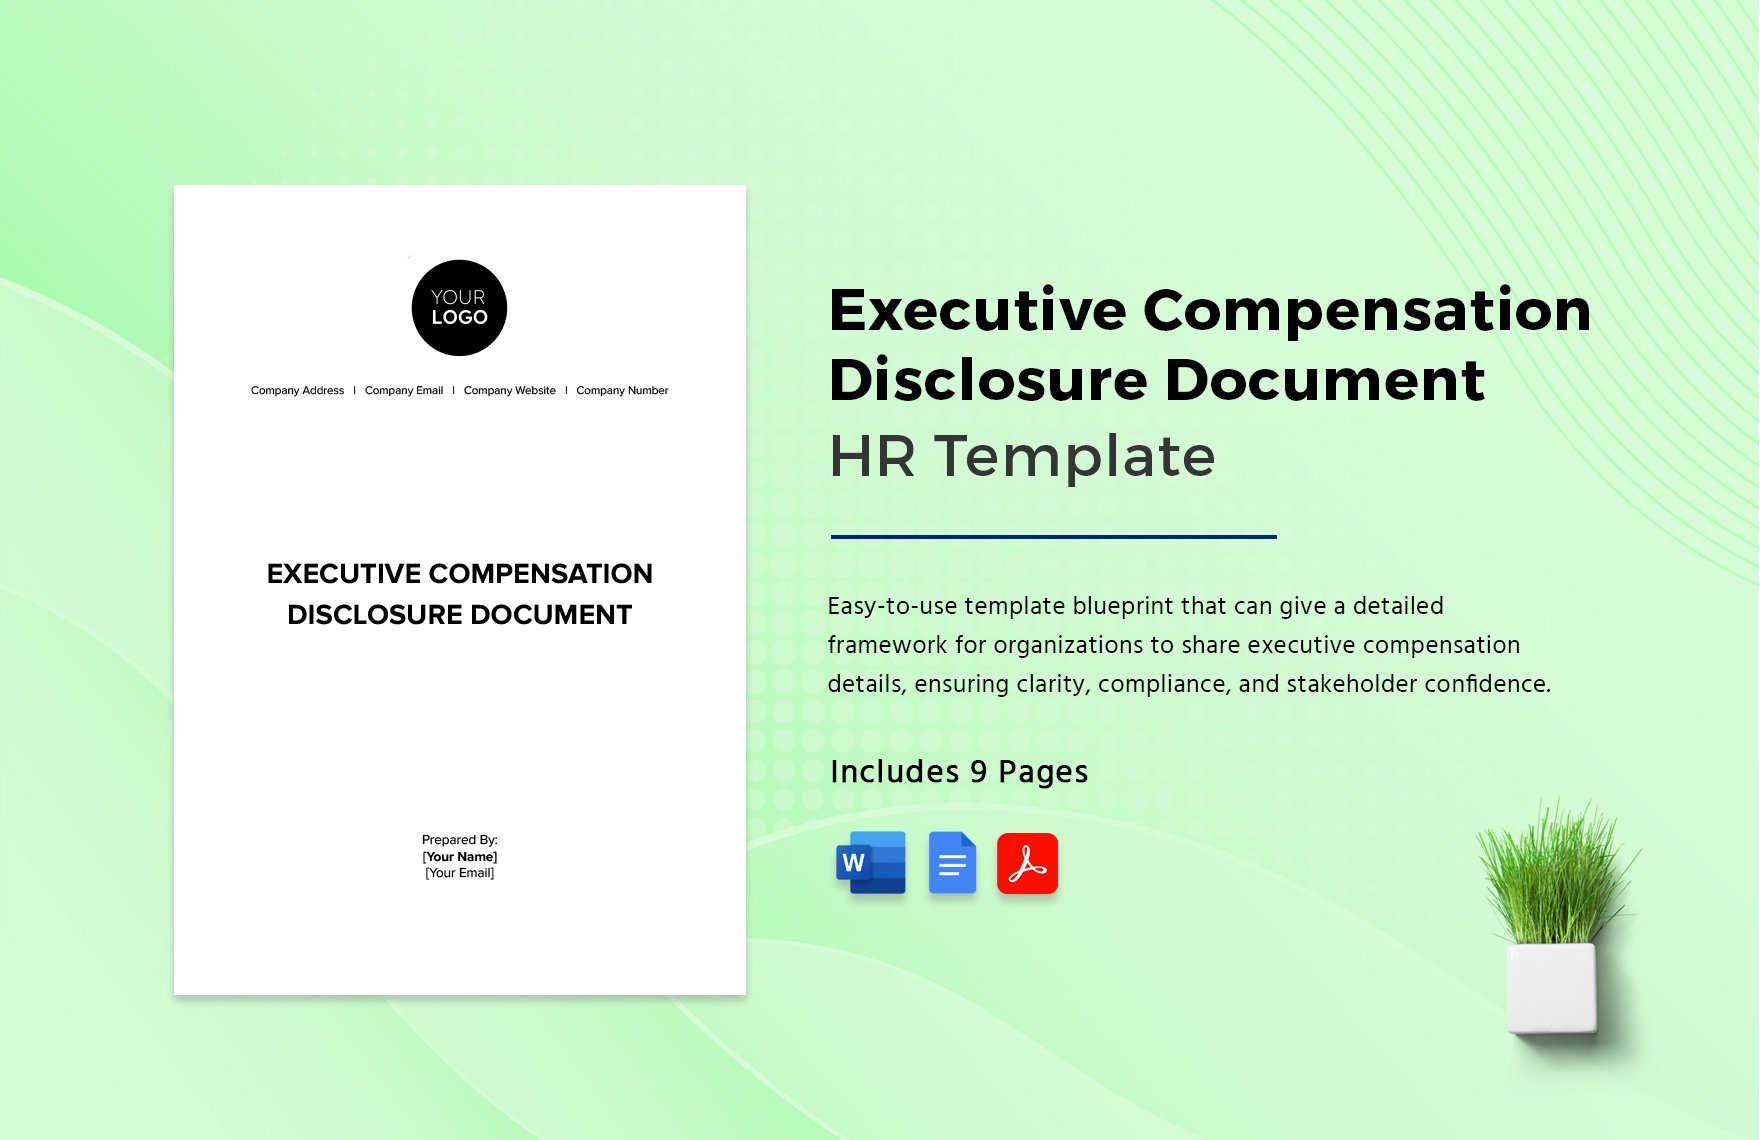 Executive Compensation Disclosure Document HR Template